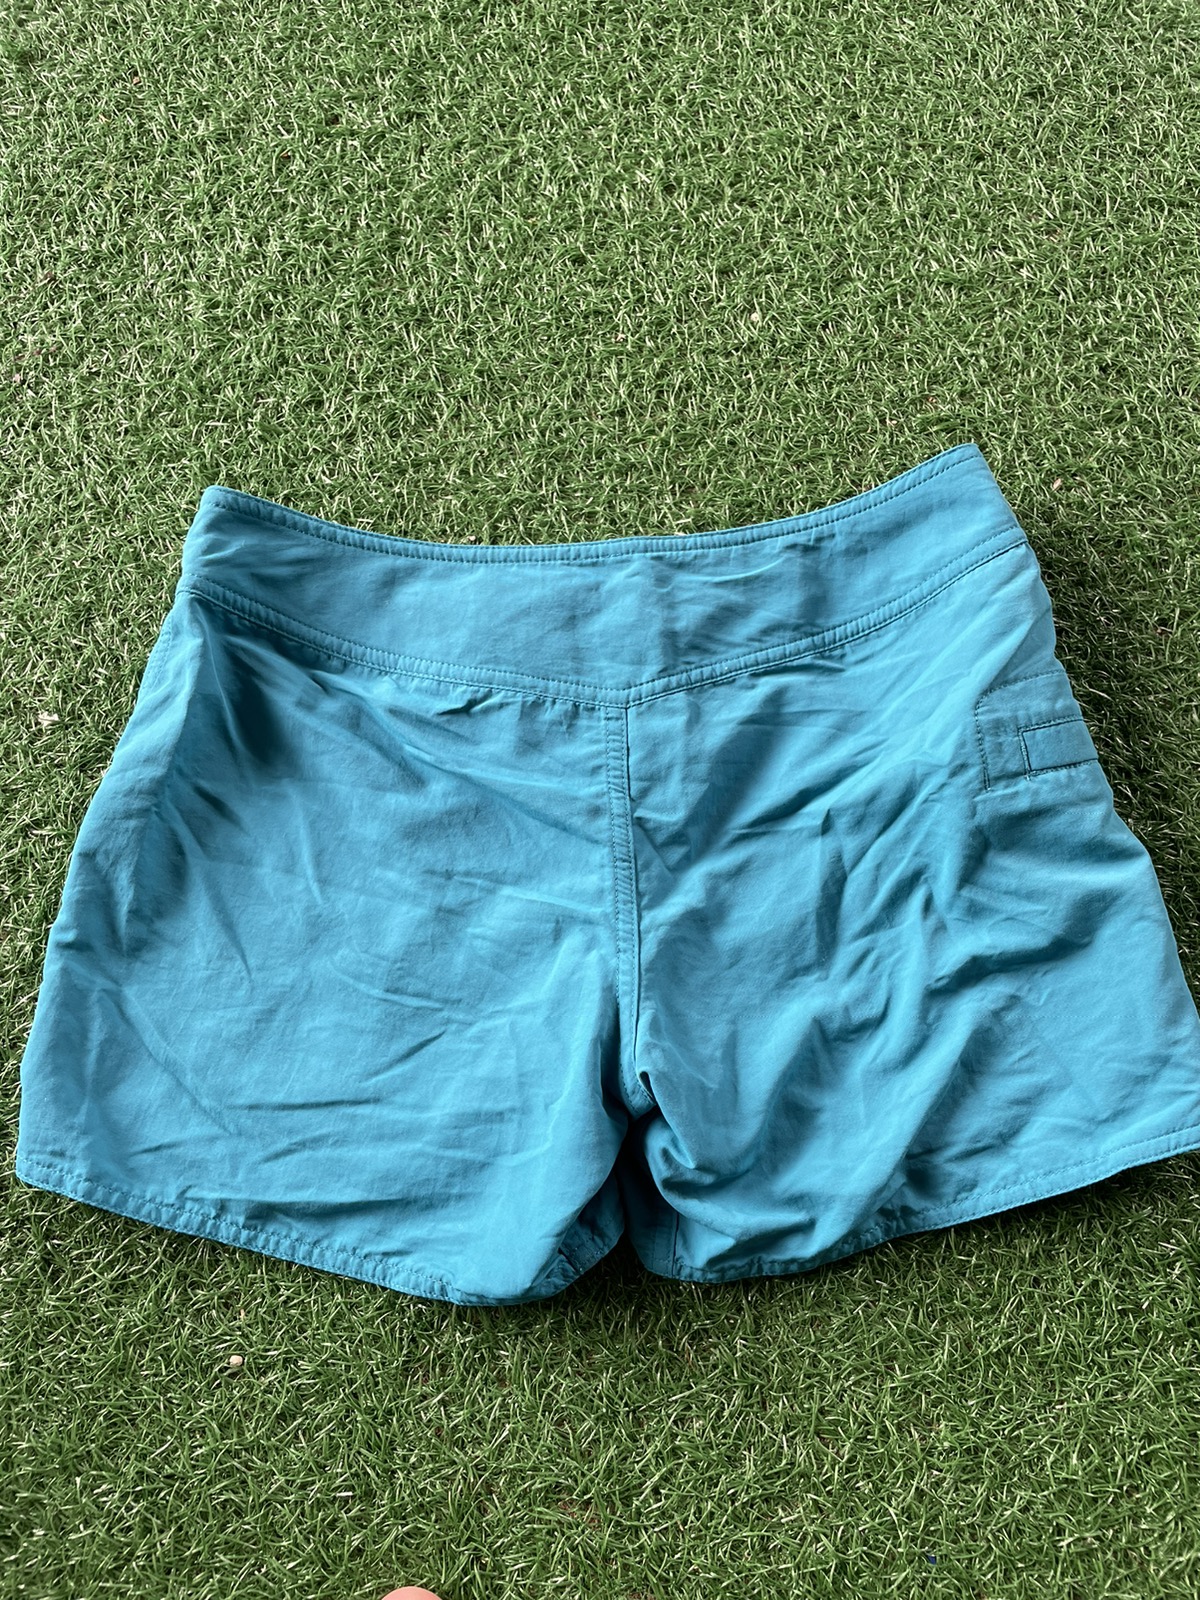 ⚡️Patagonia Water Girl Sexy Shorts Pants - 2